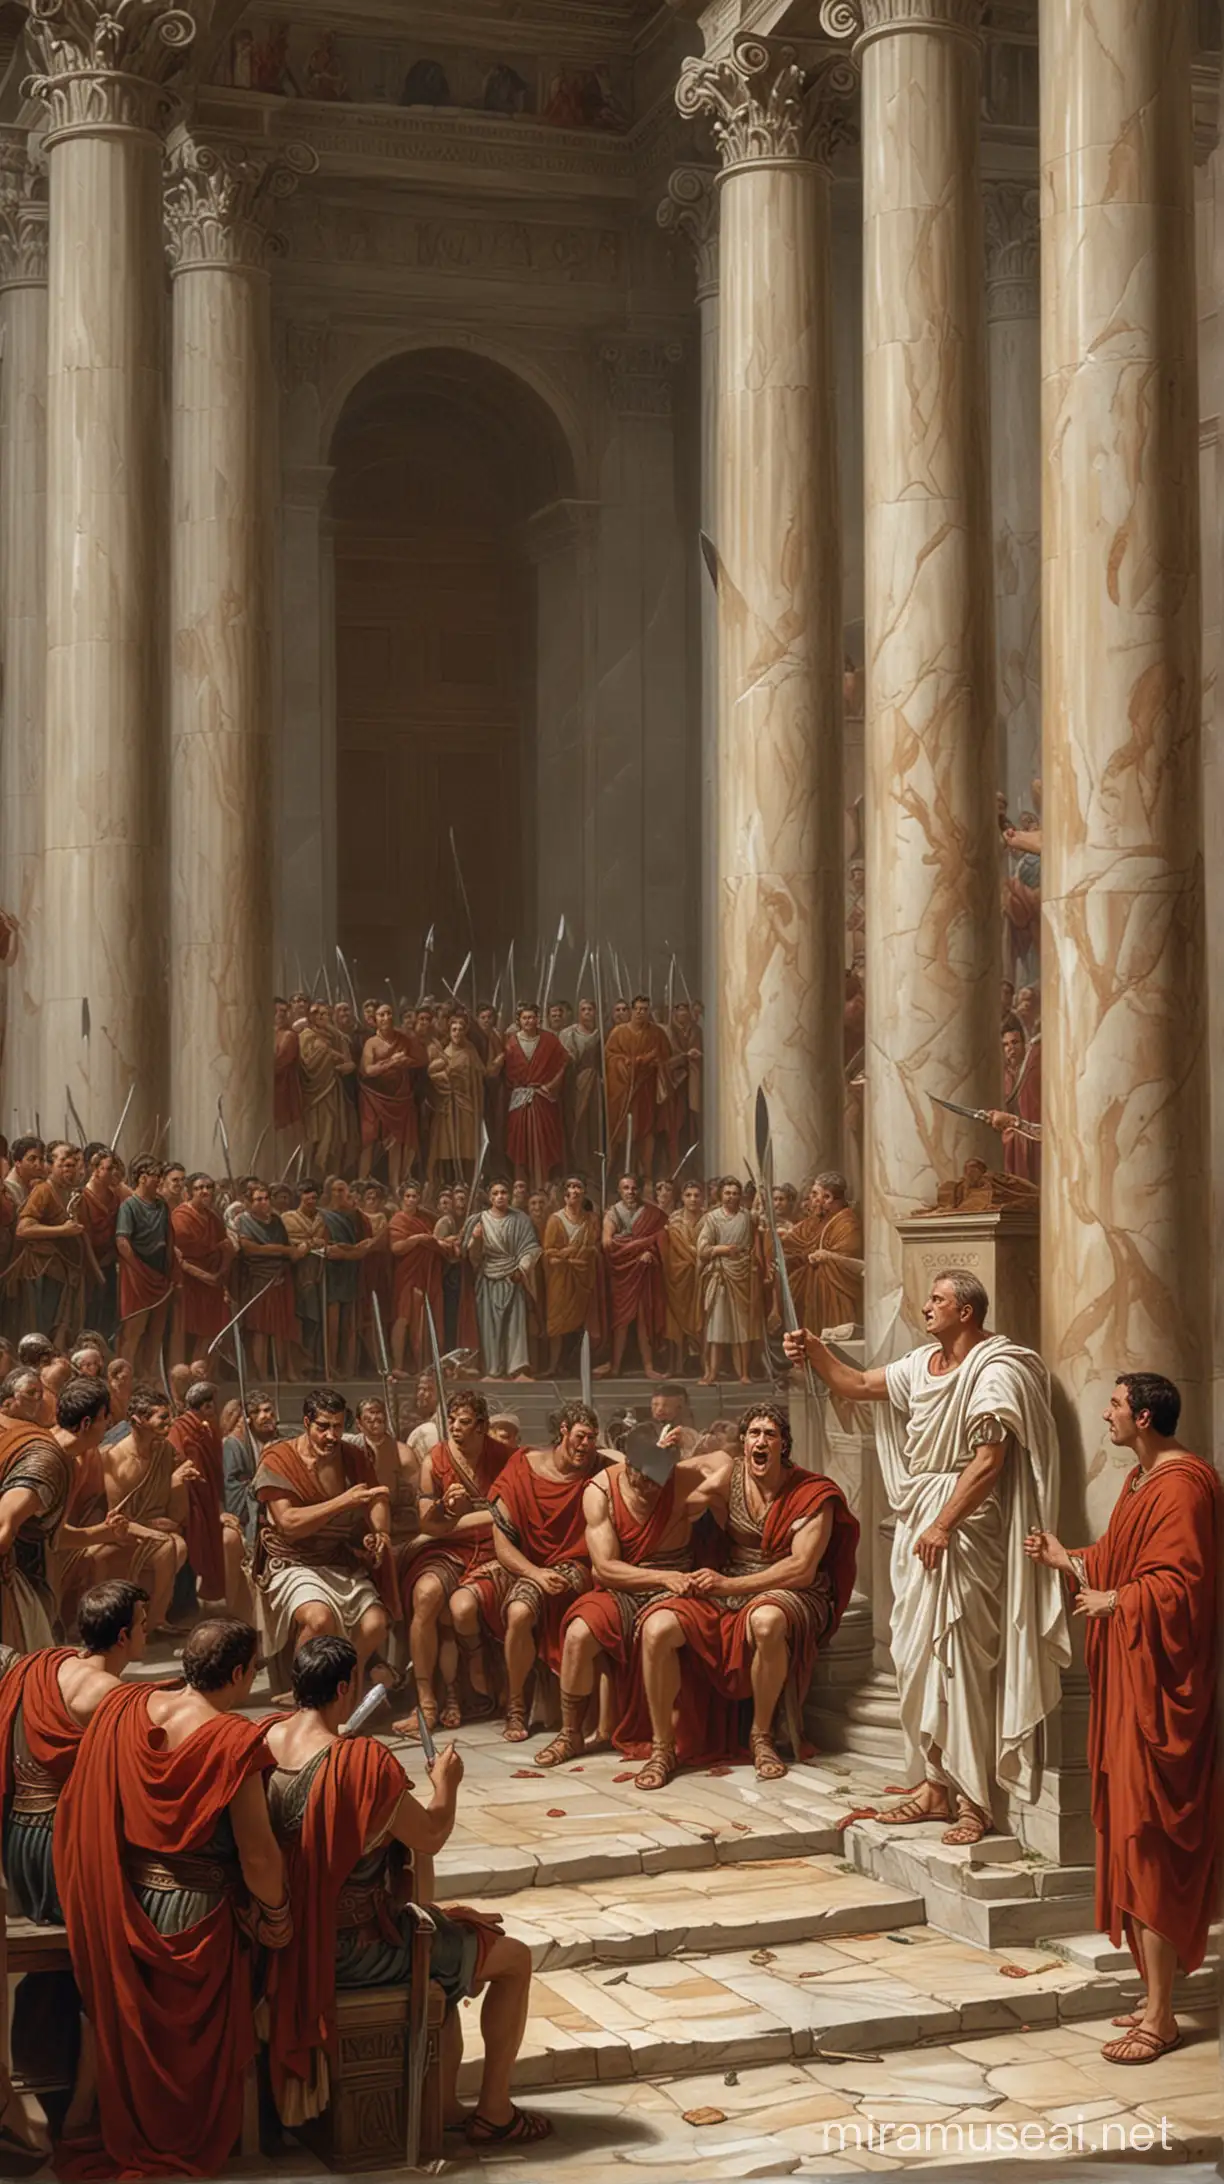 Assassination of Julius Caesar by Roman Senators in the Senate Chamber